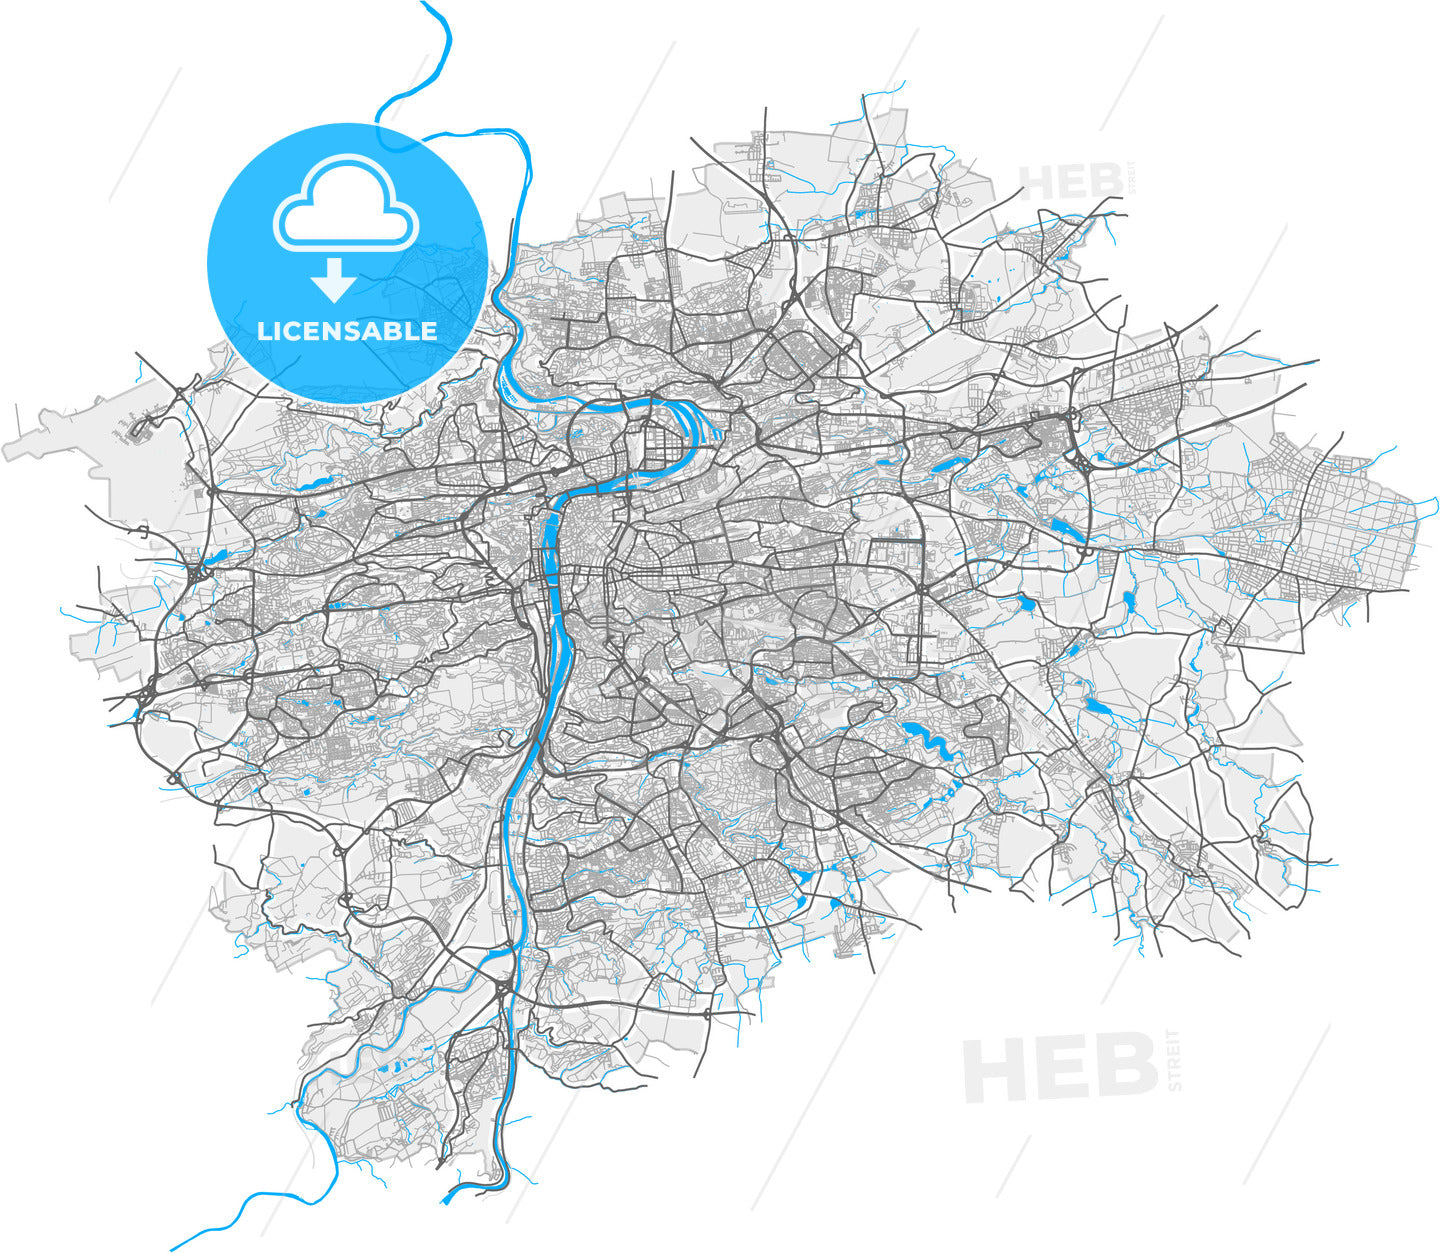 Prague, Prague, Czechia, high quality vector map